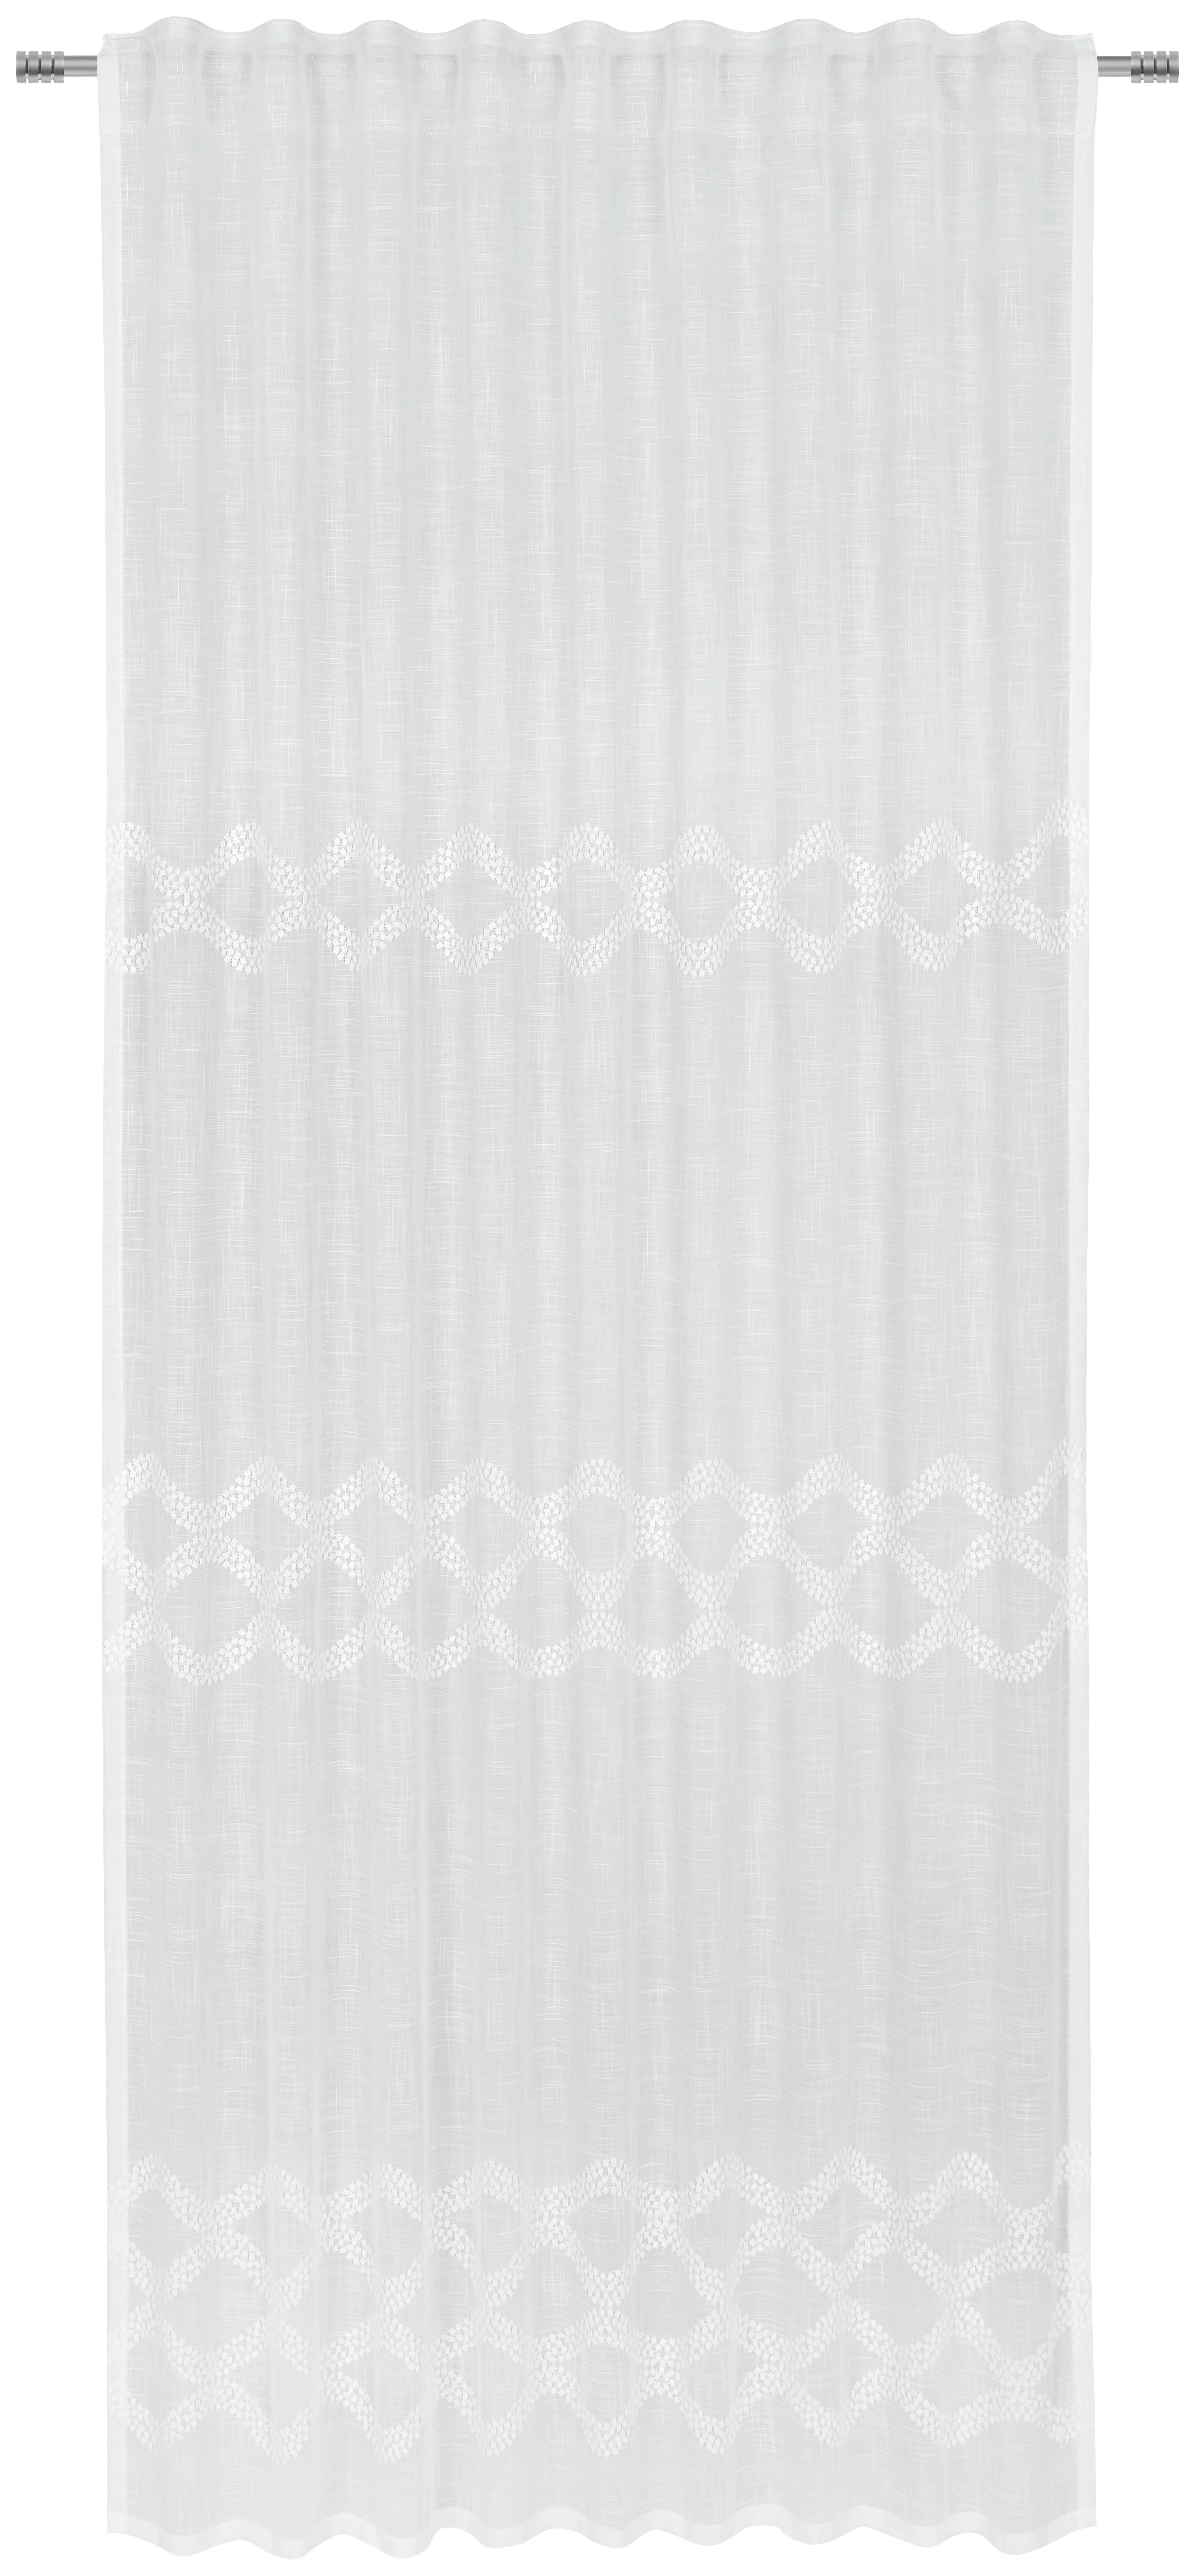 GARDINLÄNGD transparent  - naturfärgad, Design, textil (140/245cm) - Esposa